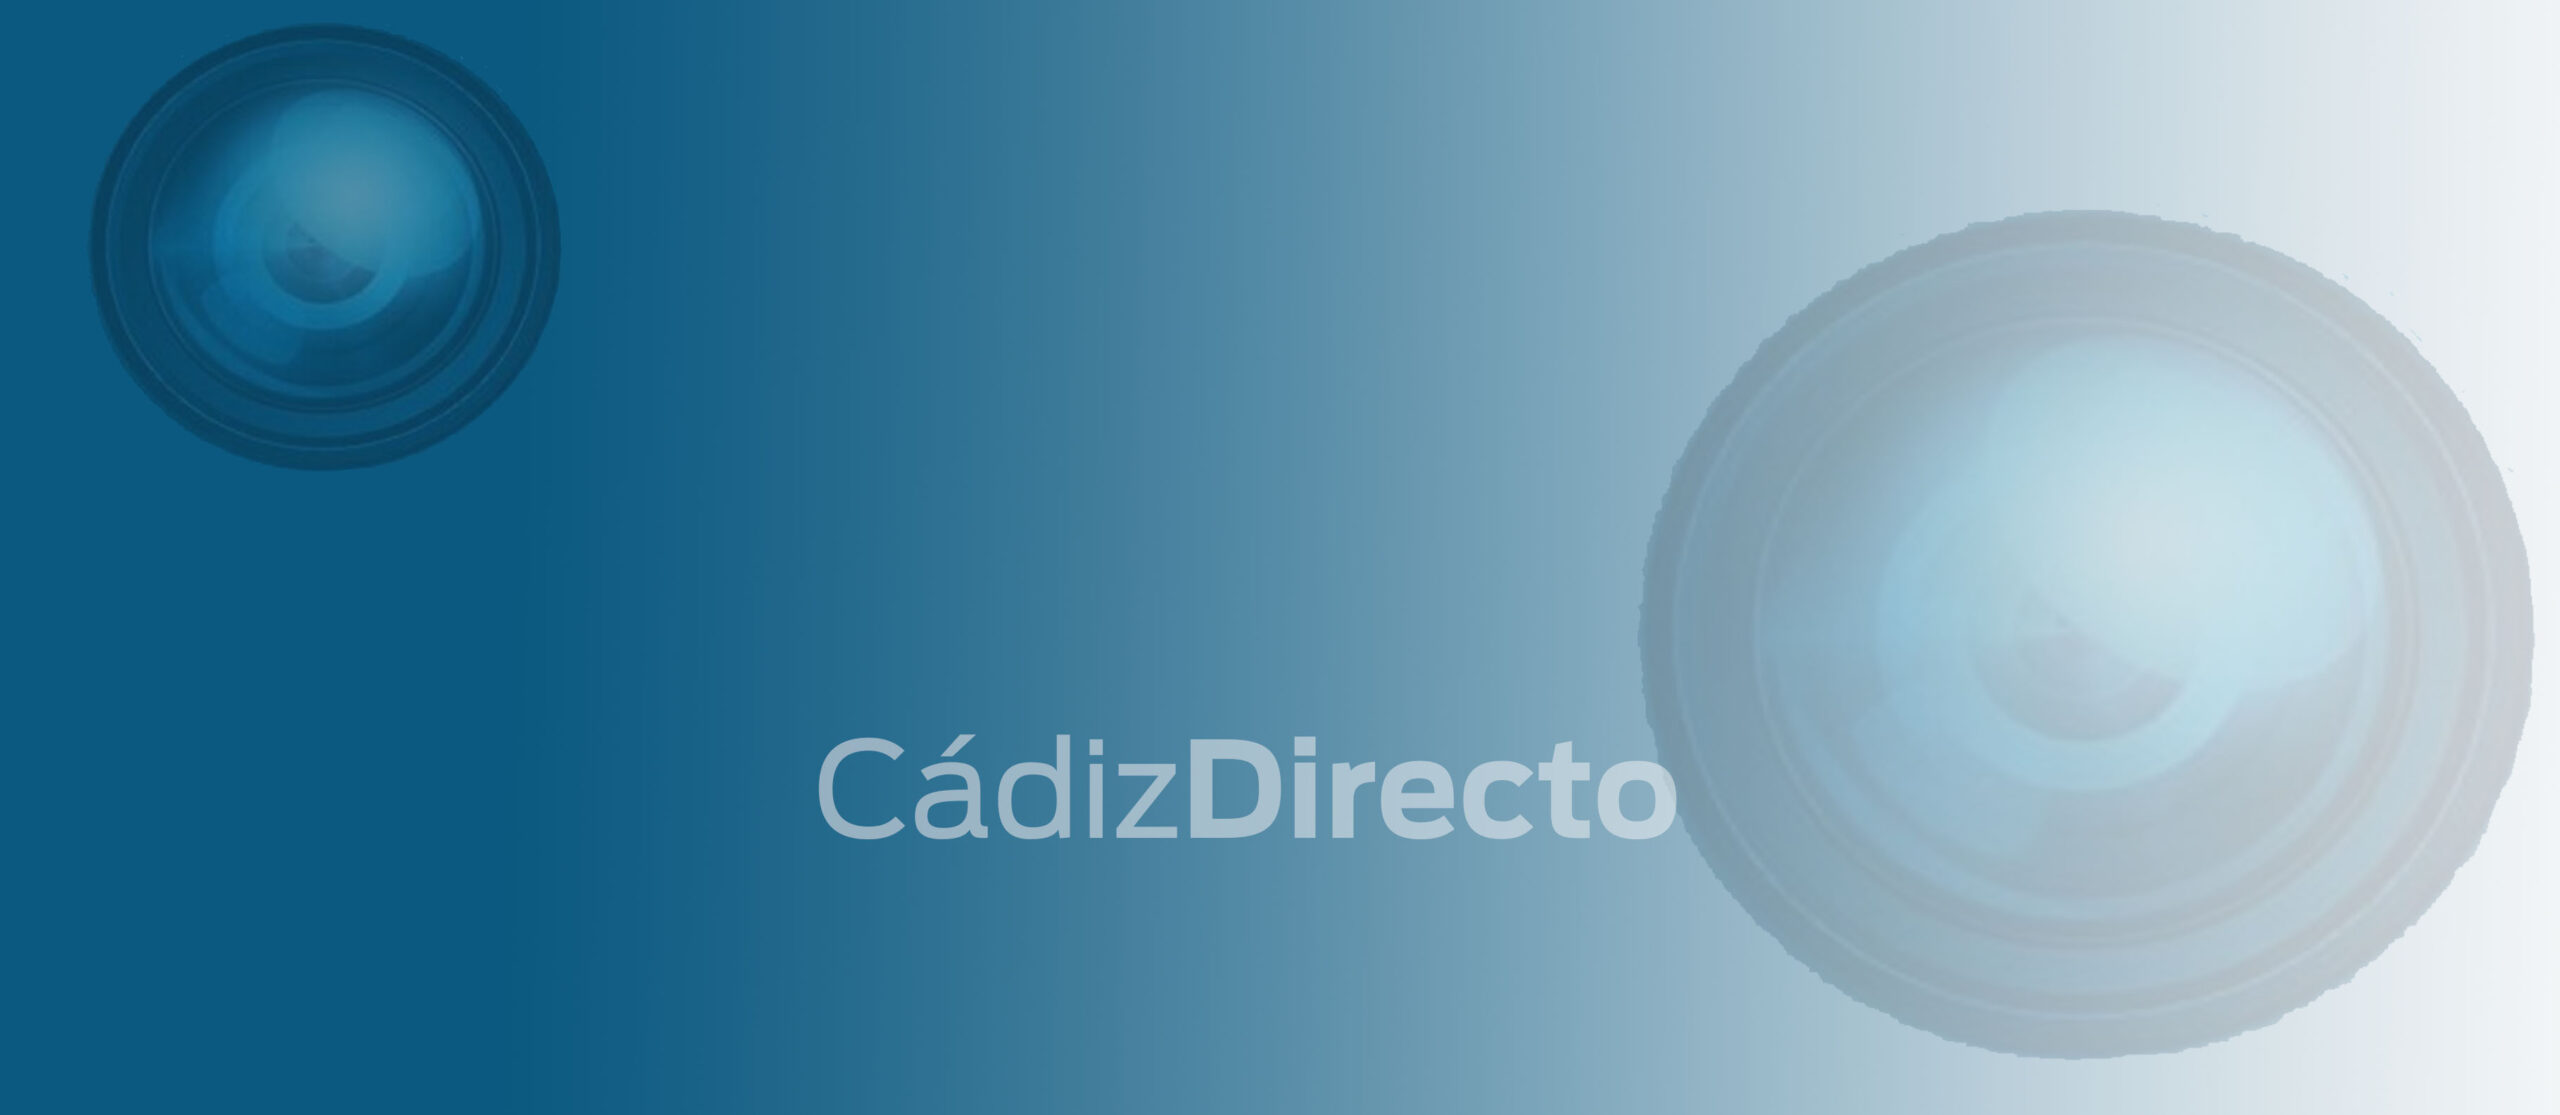 El bloqueo repentino del digital Cádiz Directo deja en el limbo a sus ocho trabajadores